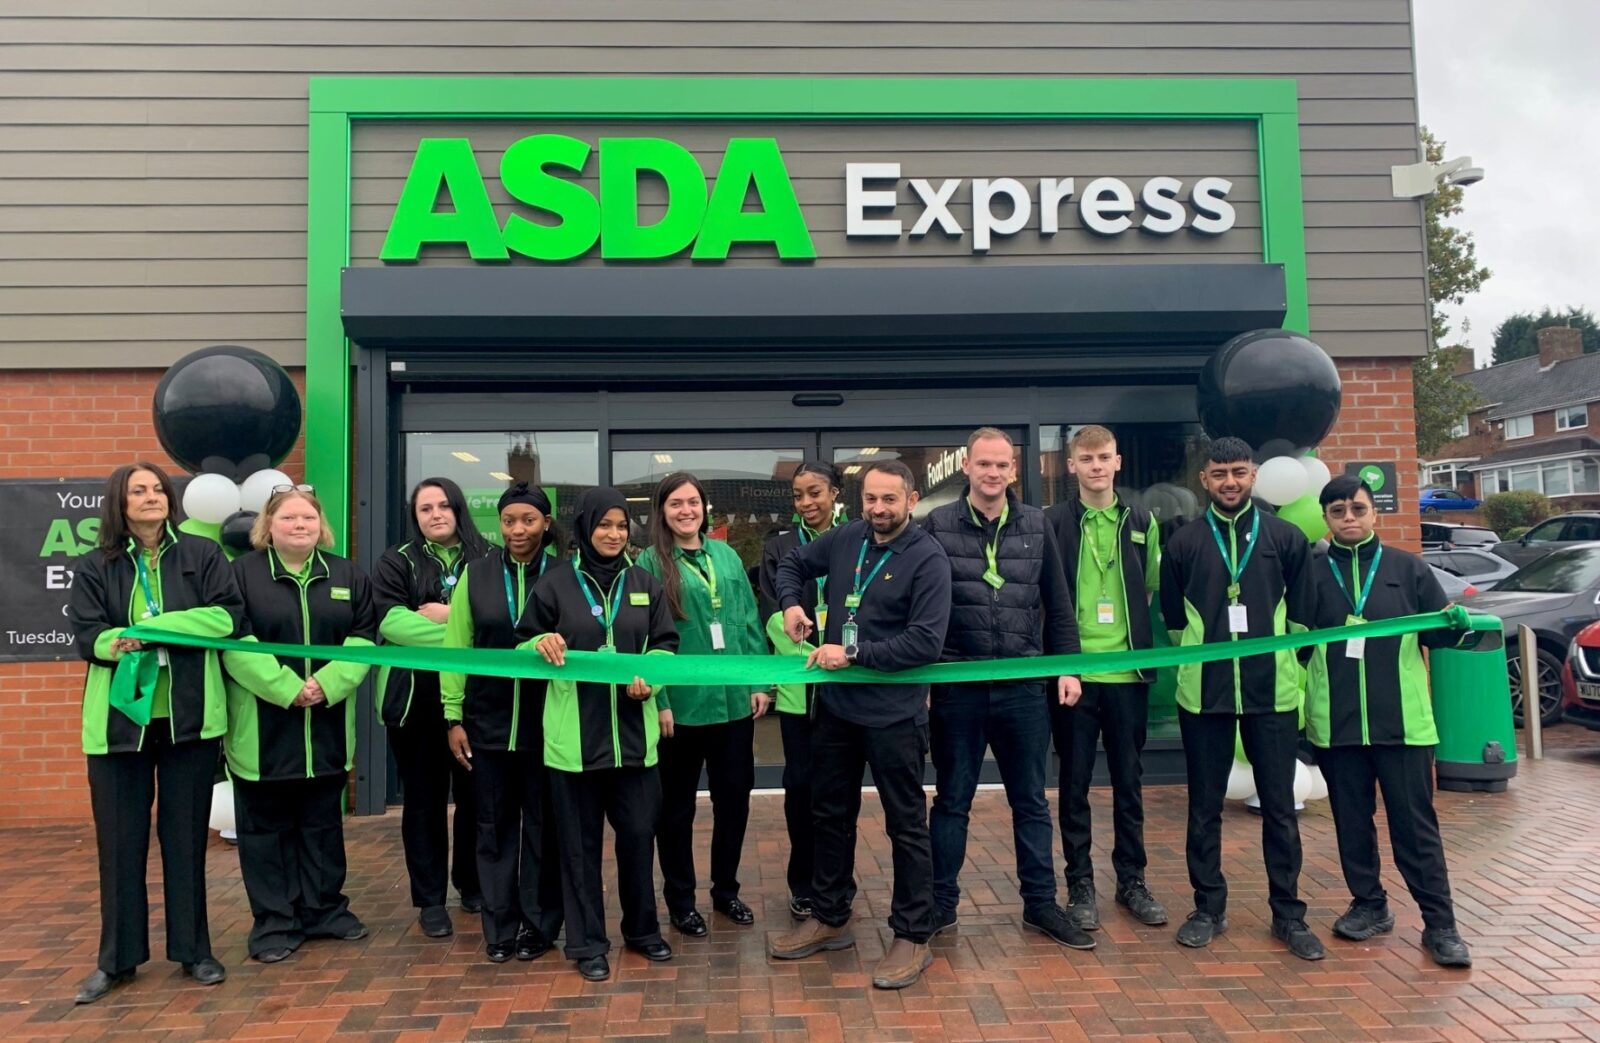 The opening of an Asda express shop.